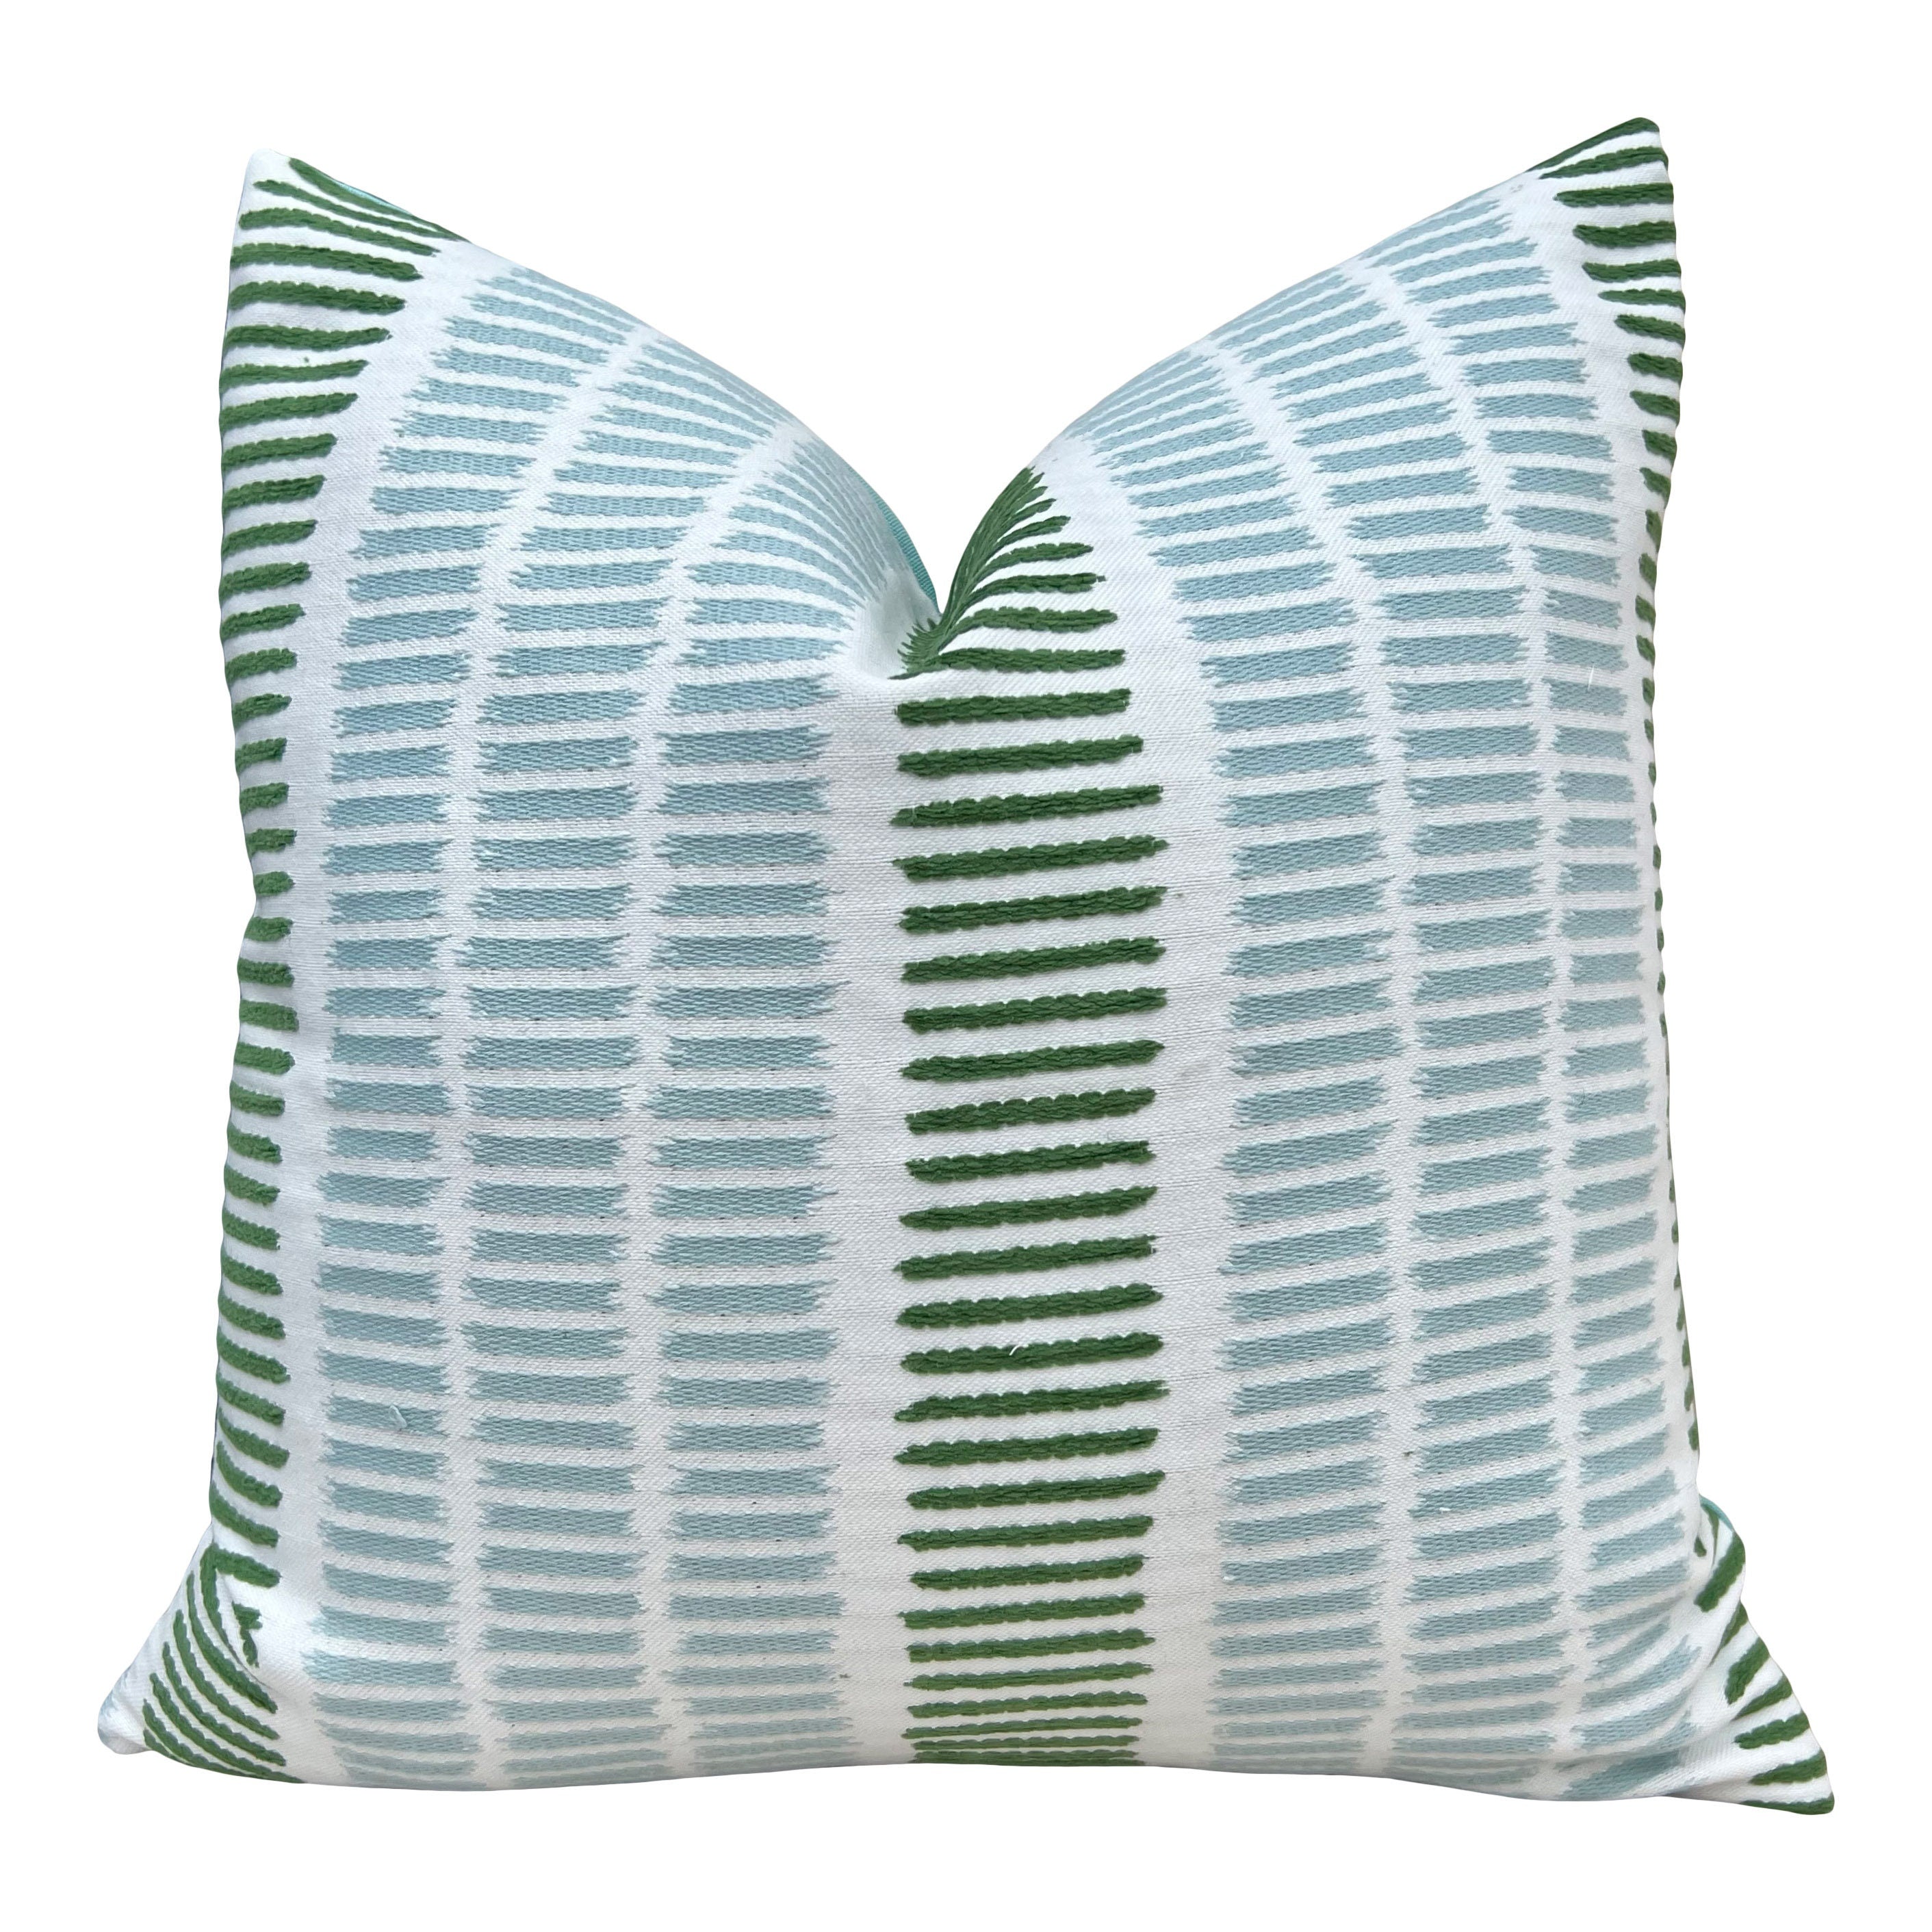 Outdoor Top Sail Striped Pillow in Aqua and Green. Designer Woven Decorative Sunbrella Outdoor Pillow Cover in Aqua and Green Stripes